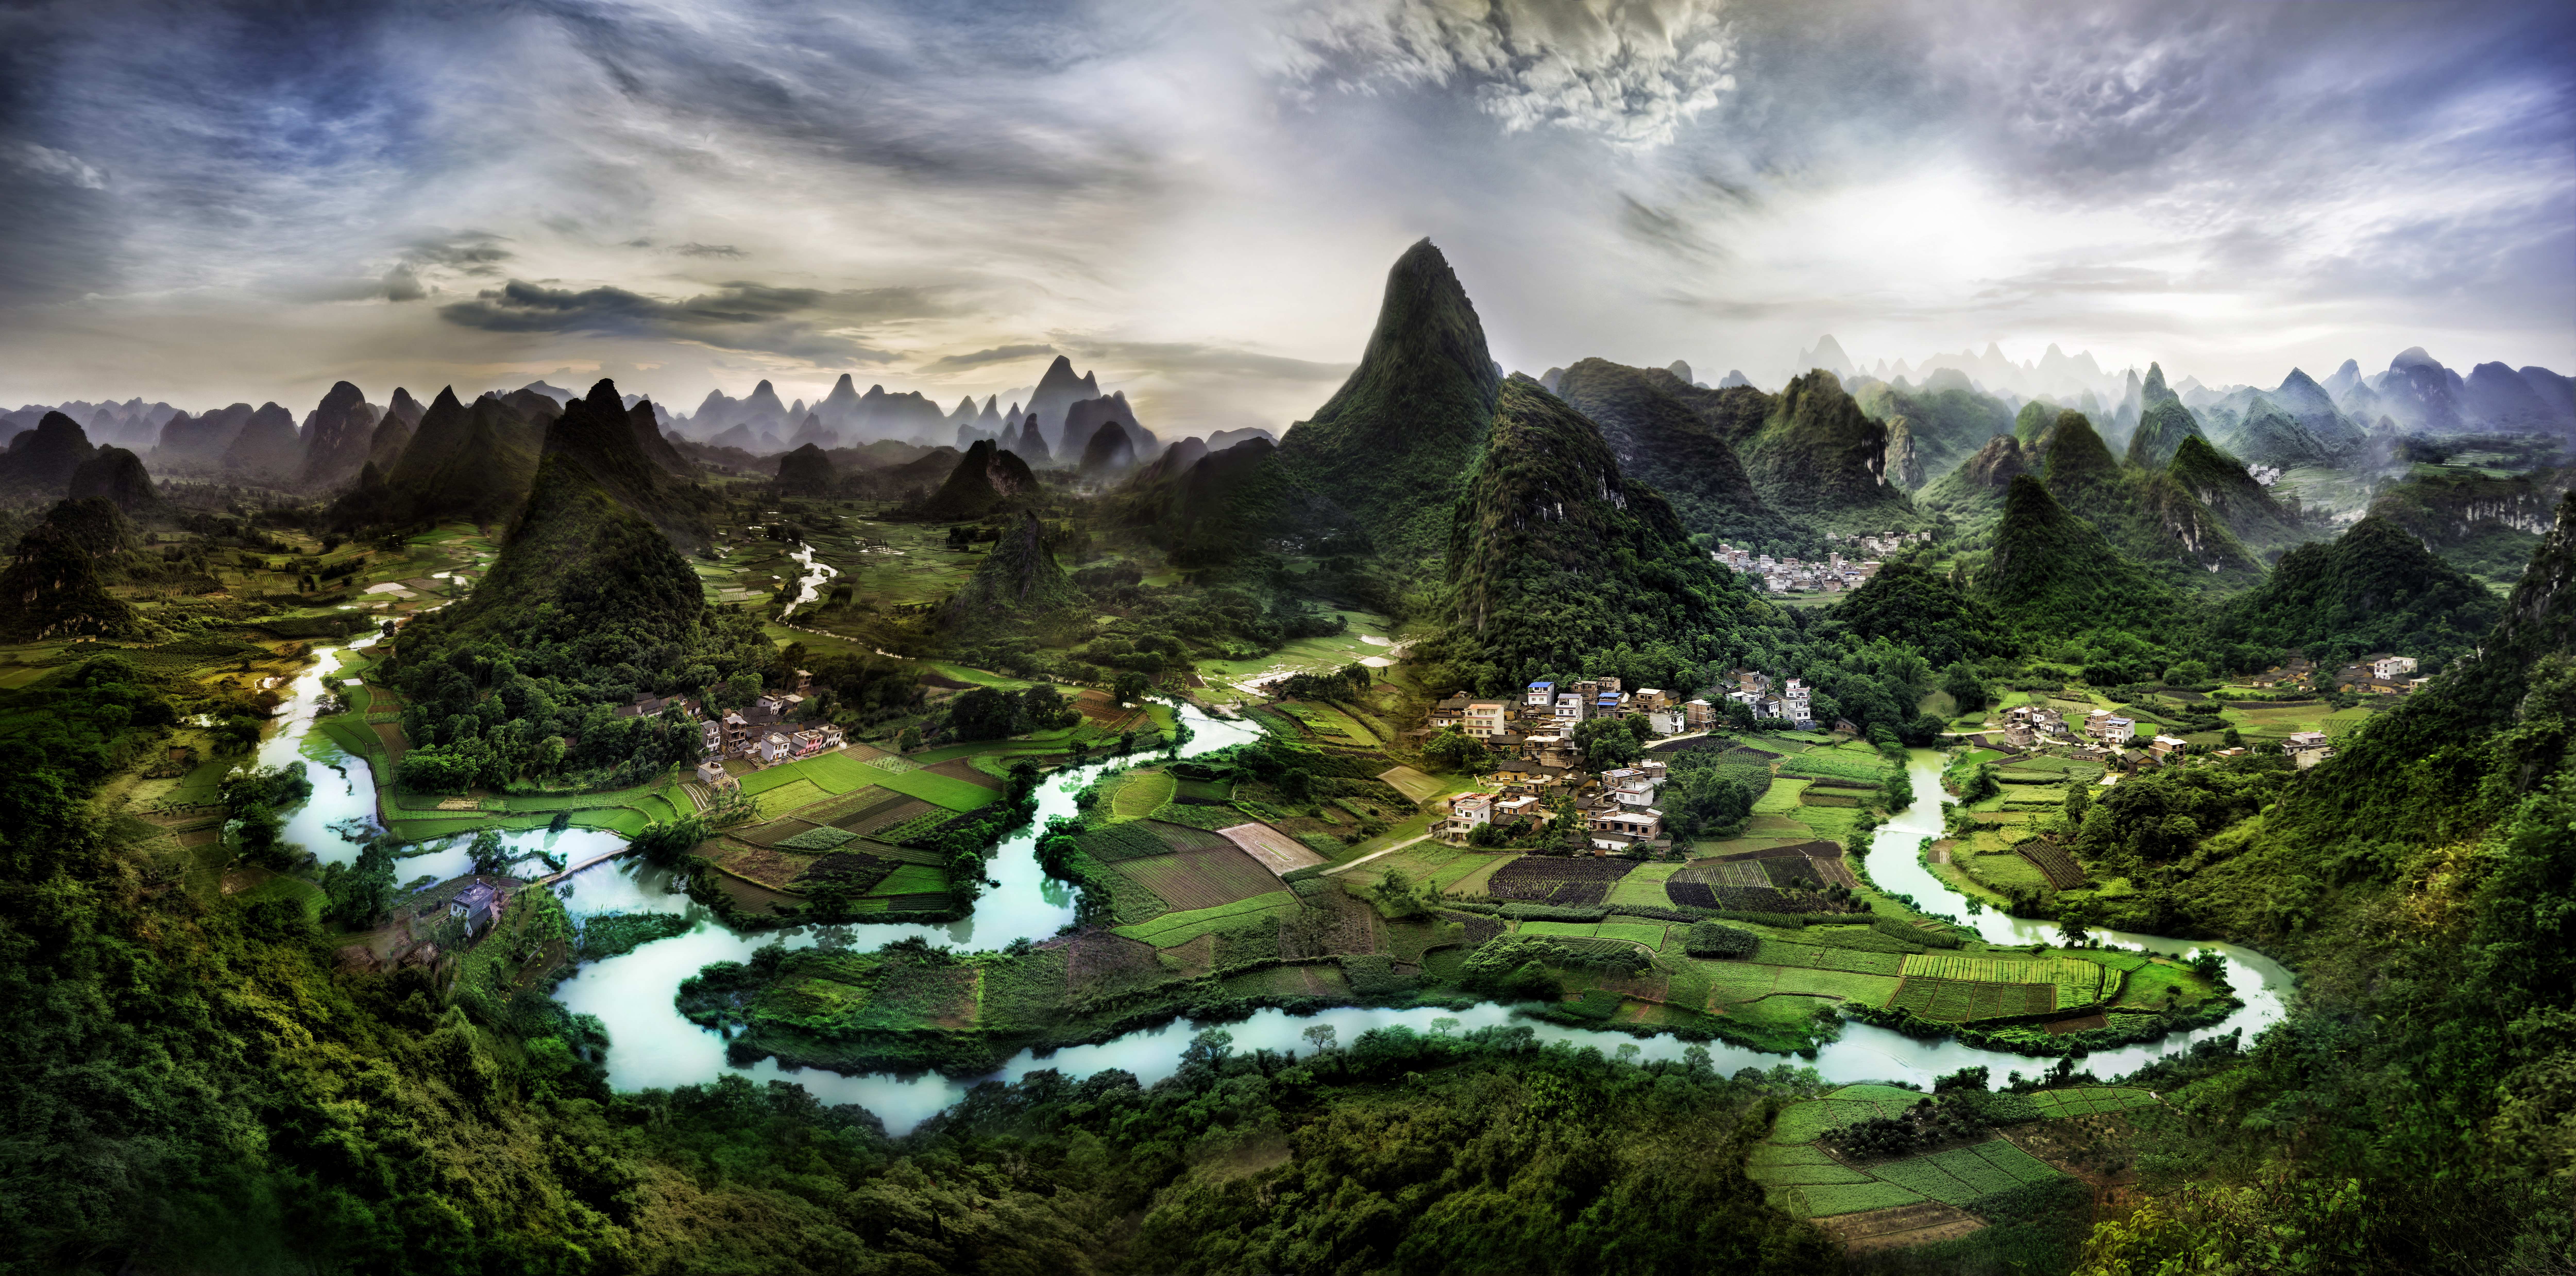 Photography Landscape 8k Ultra HD Wallpaper by Trey Ratcliff